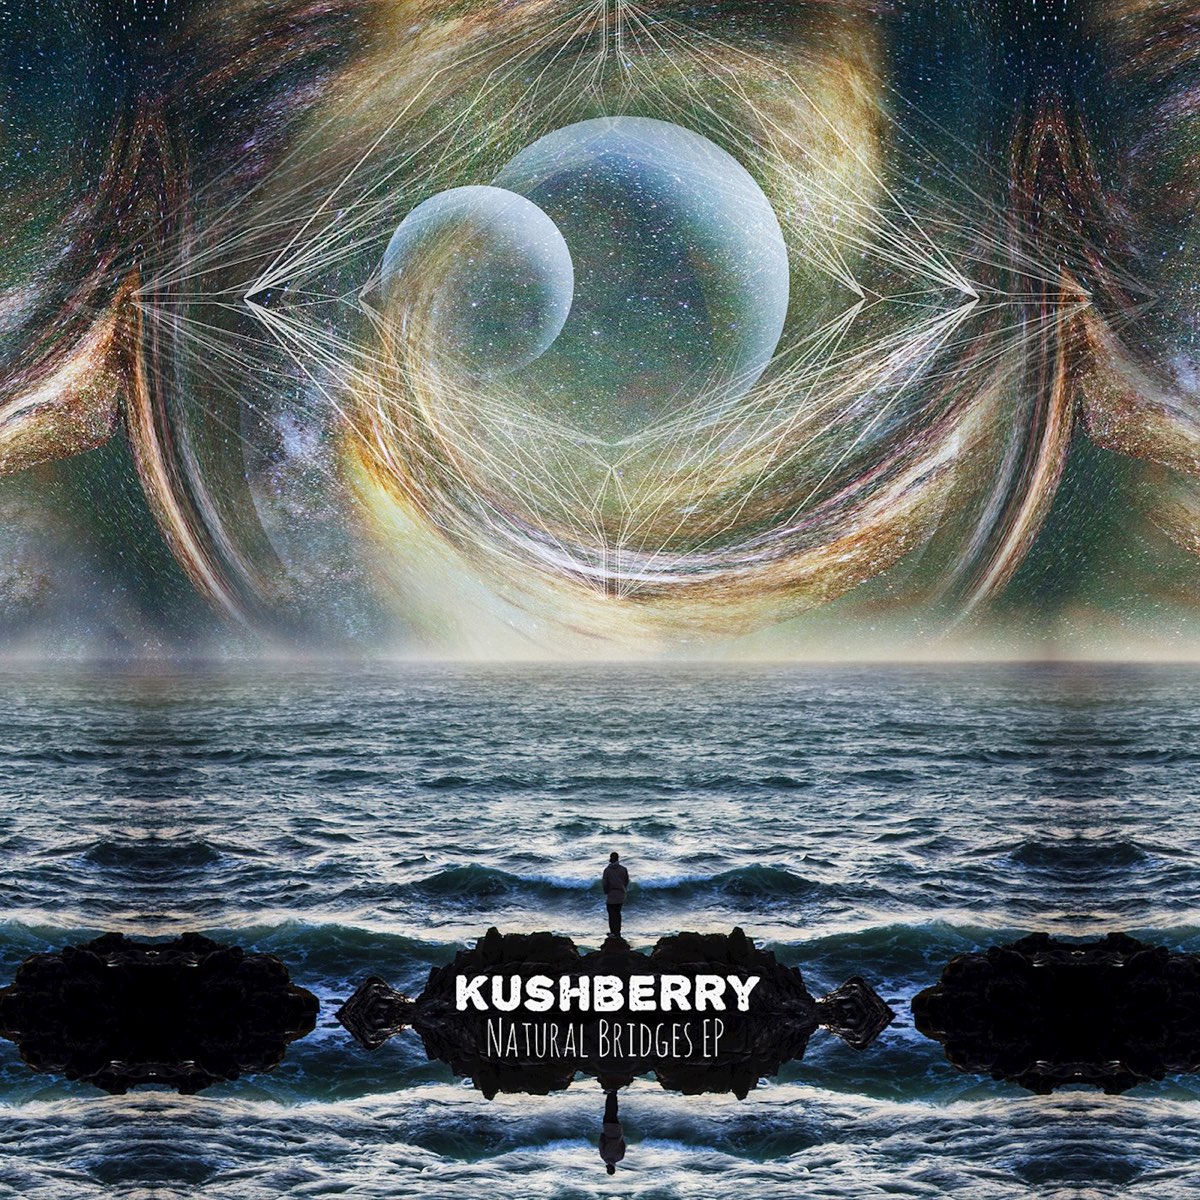 Kushberry. A low vera перевод